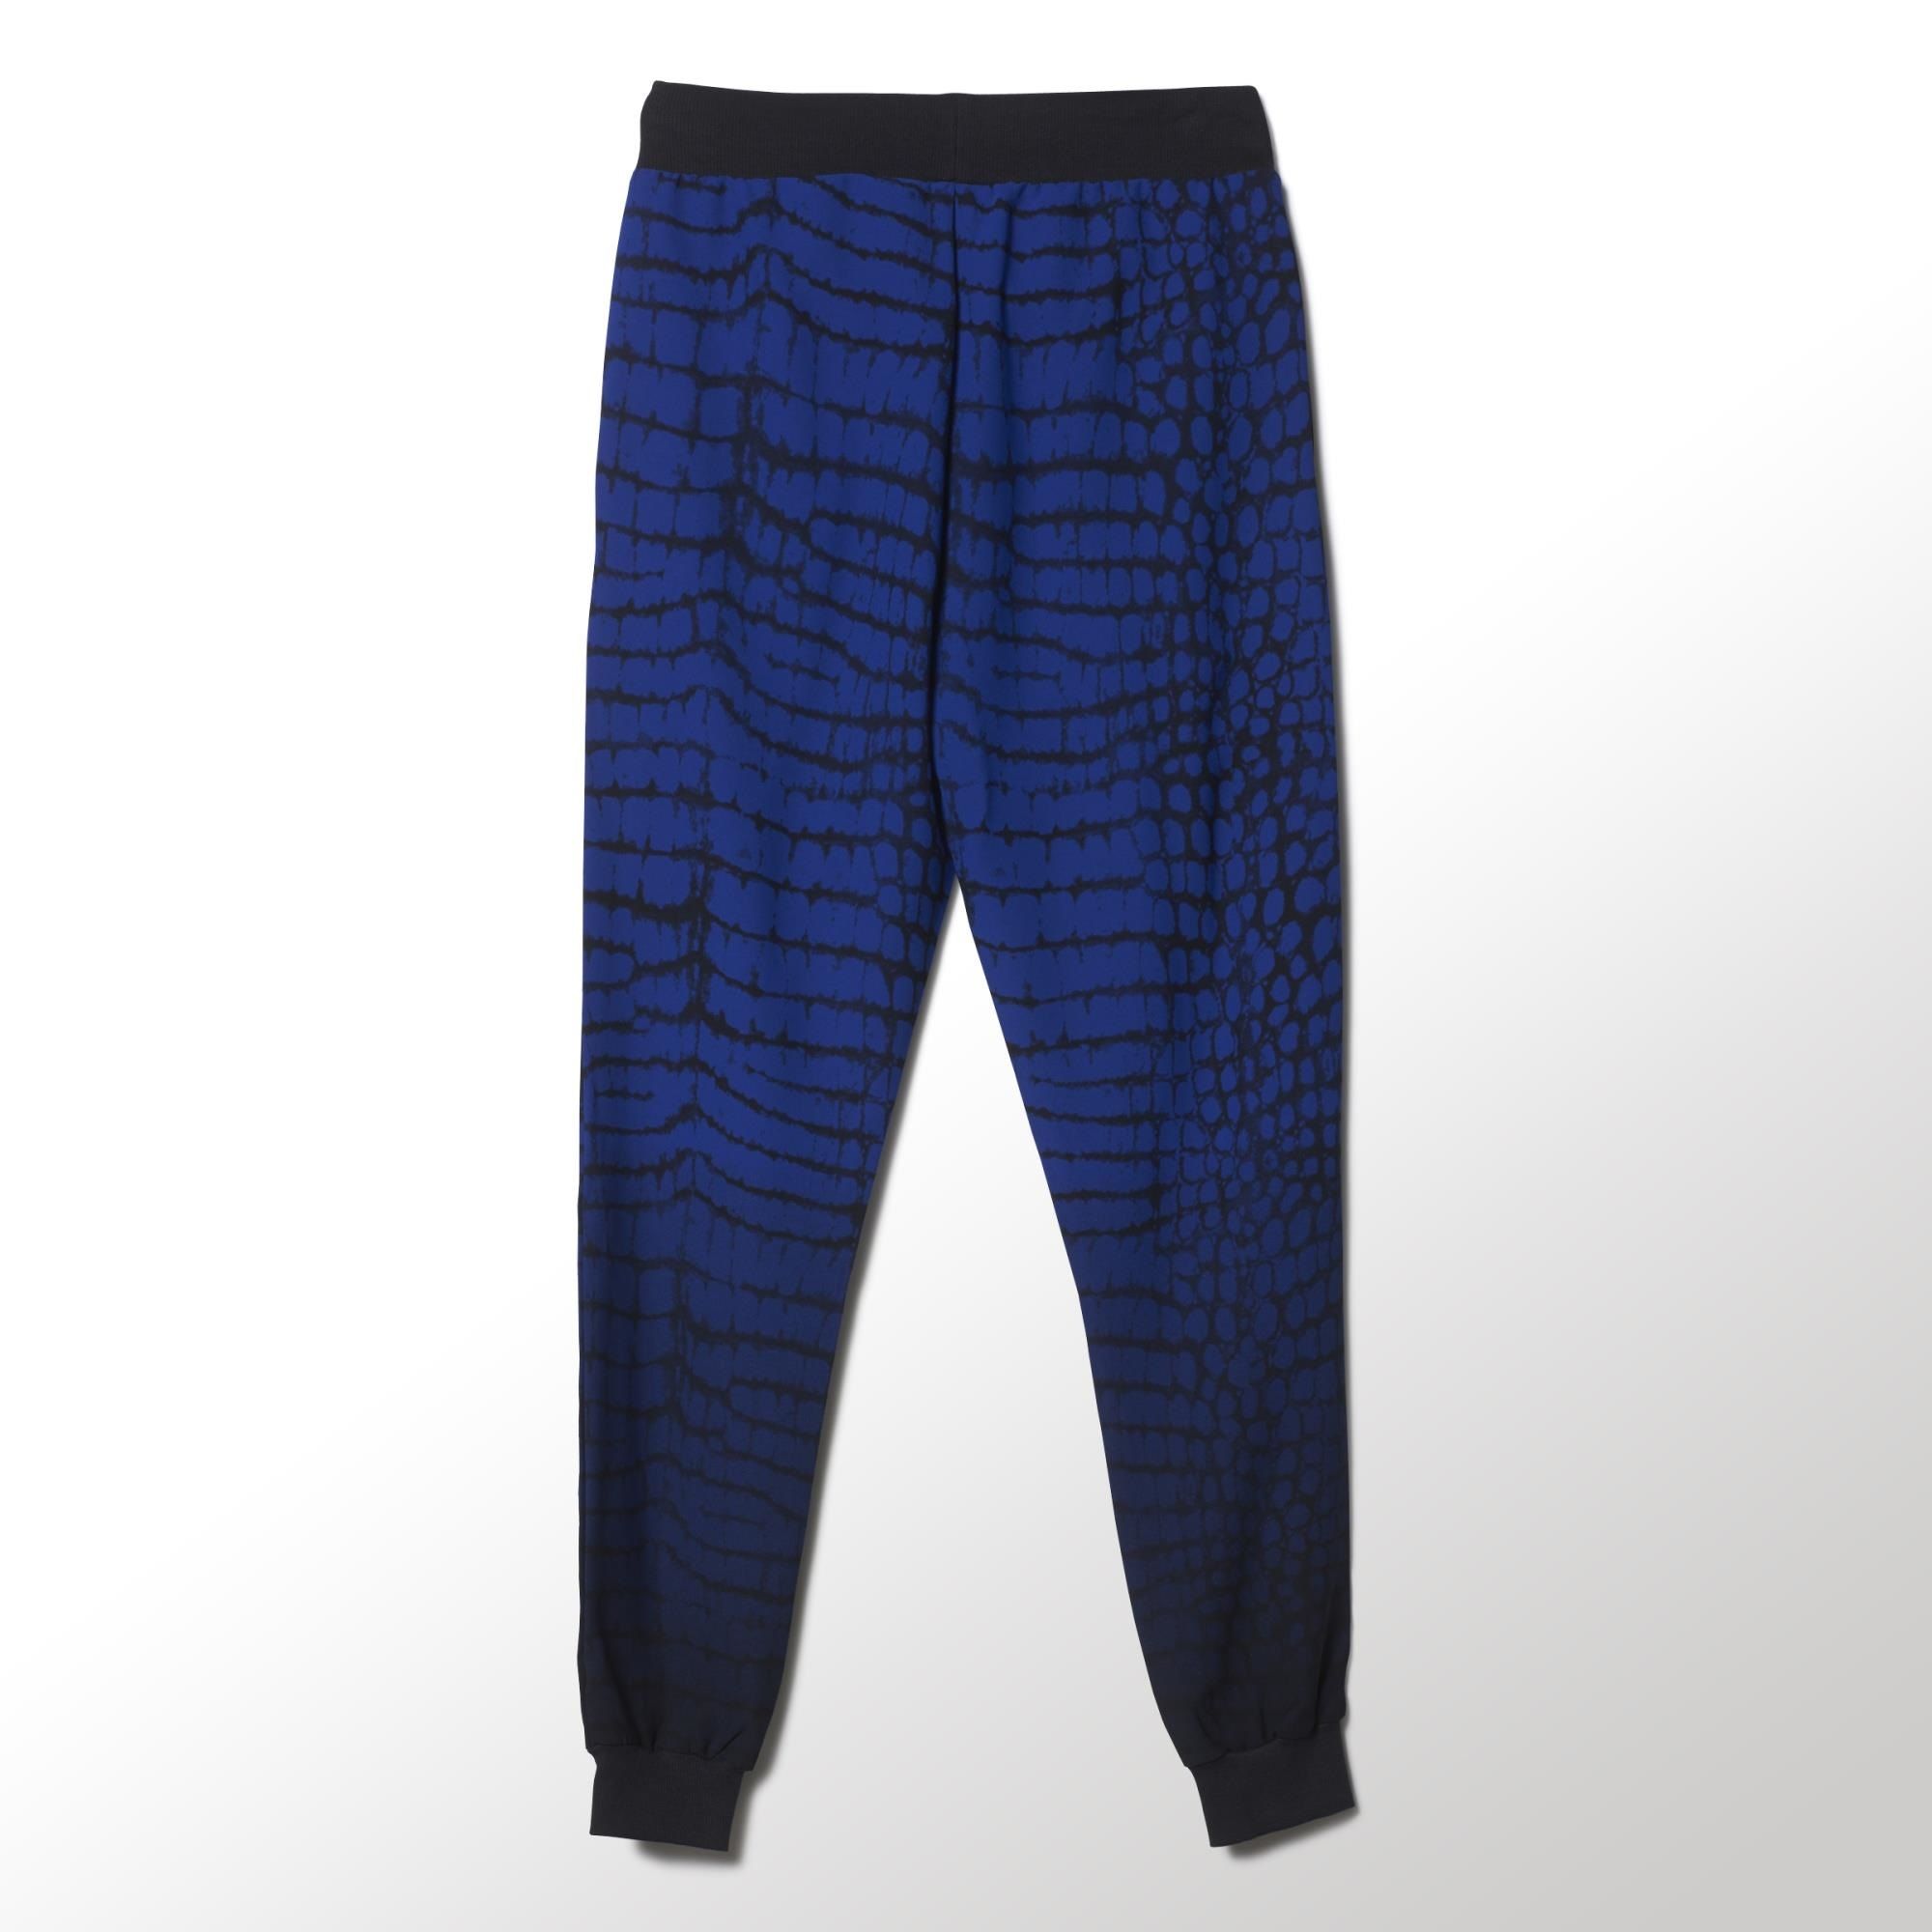 Adidas Pantalón Mujer New Prin Cuffed (azul/negr)